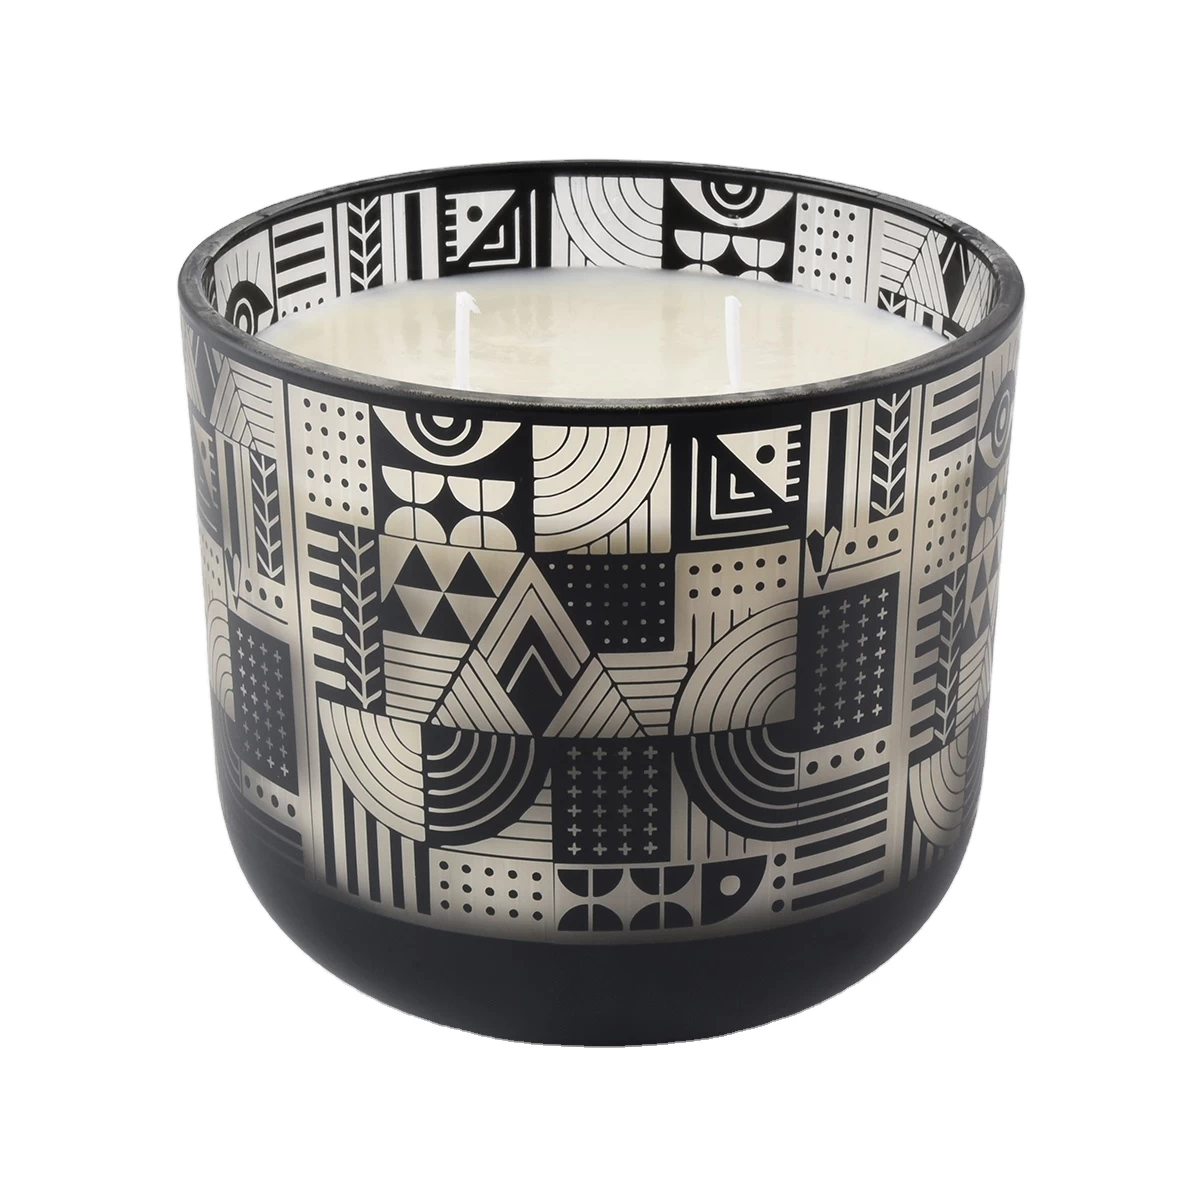 Wholesales empty tealight decorative black ceramic candle holder jar